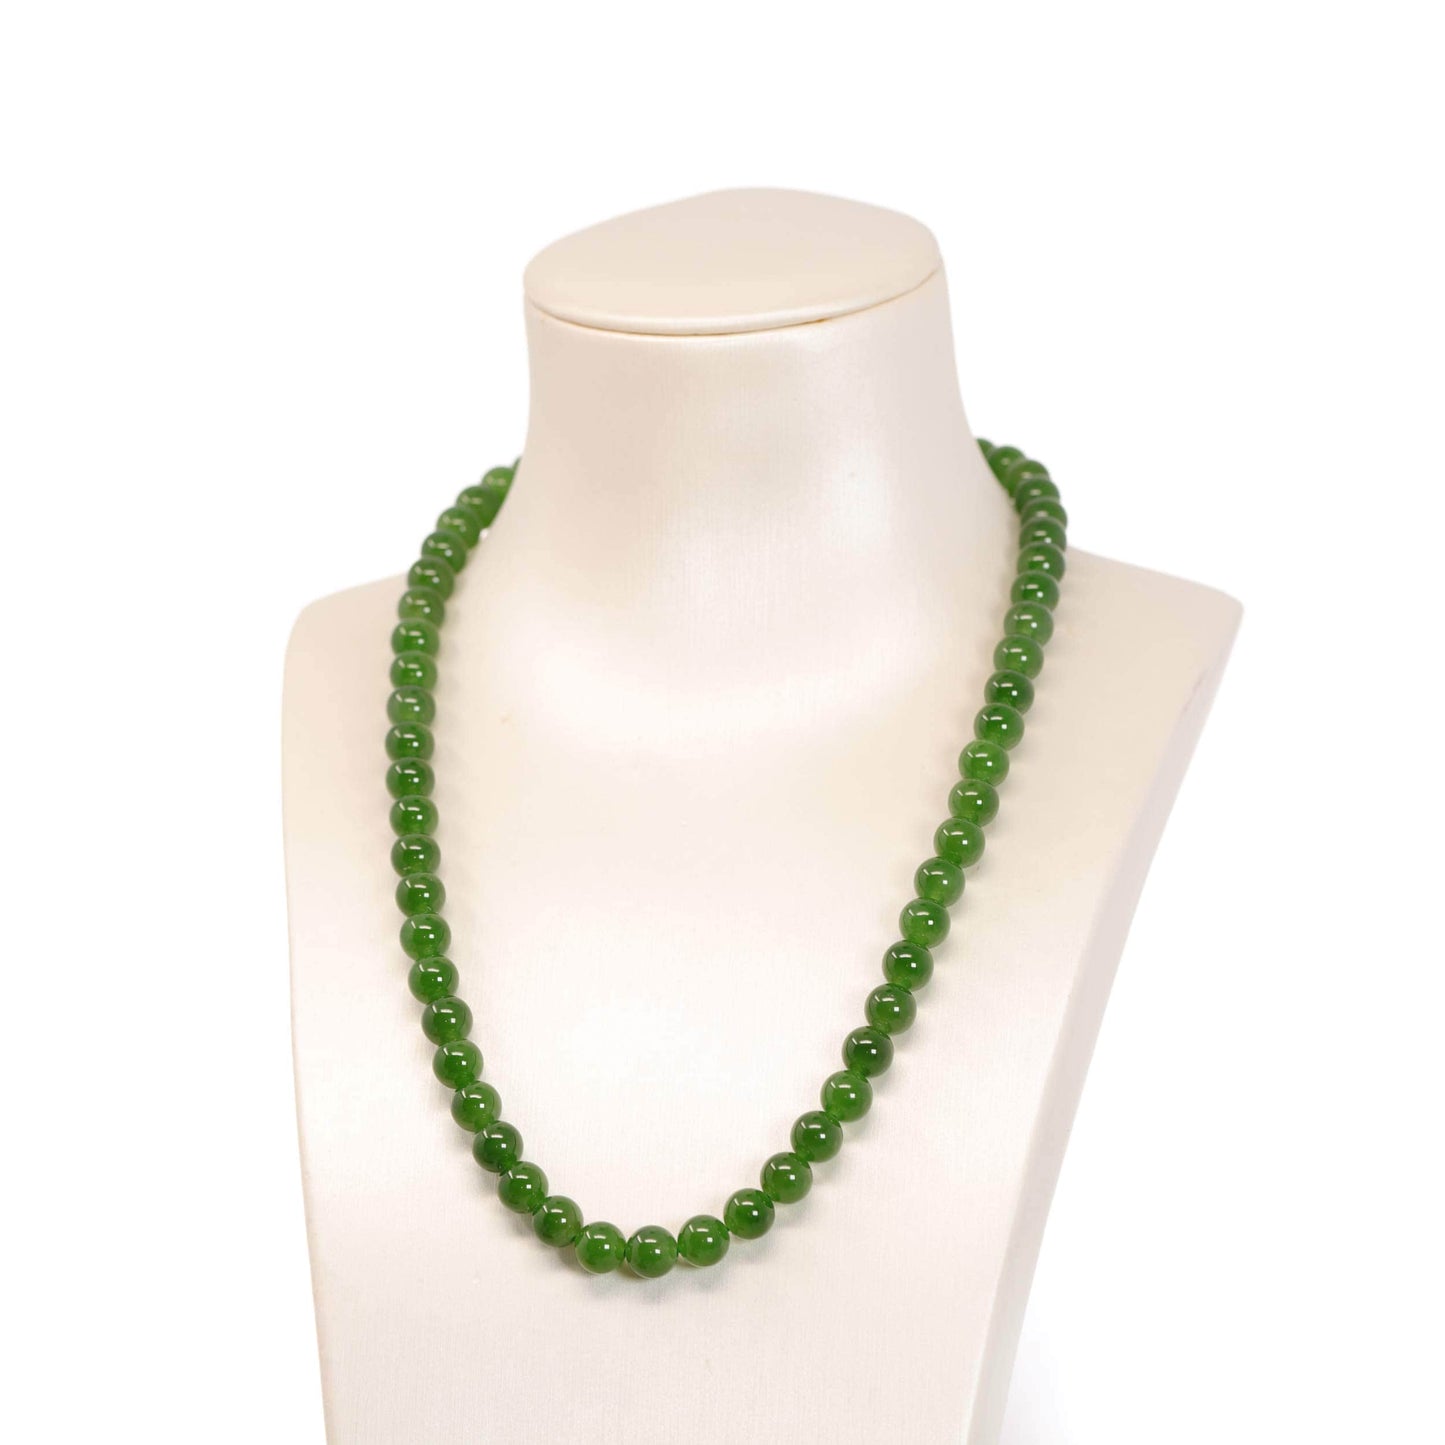 Gemstones - Nephrite Jade Round Beads 6mm